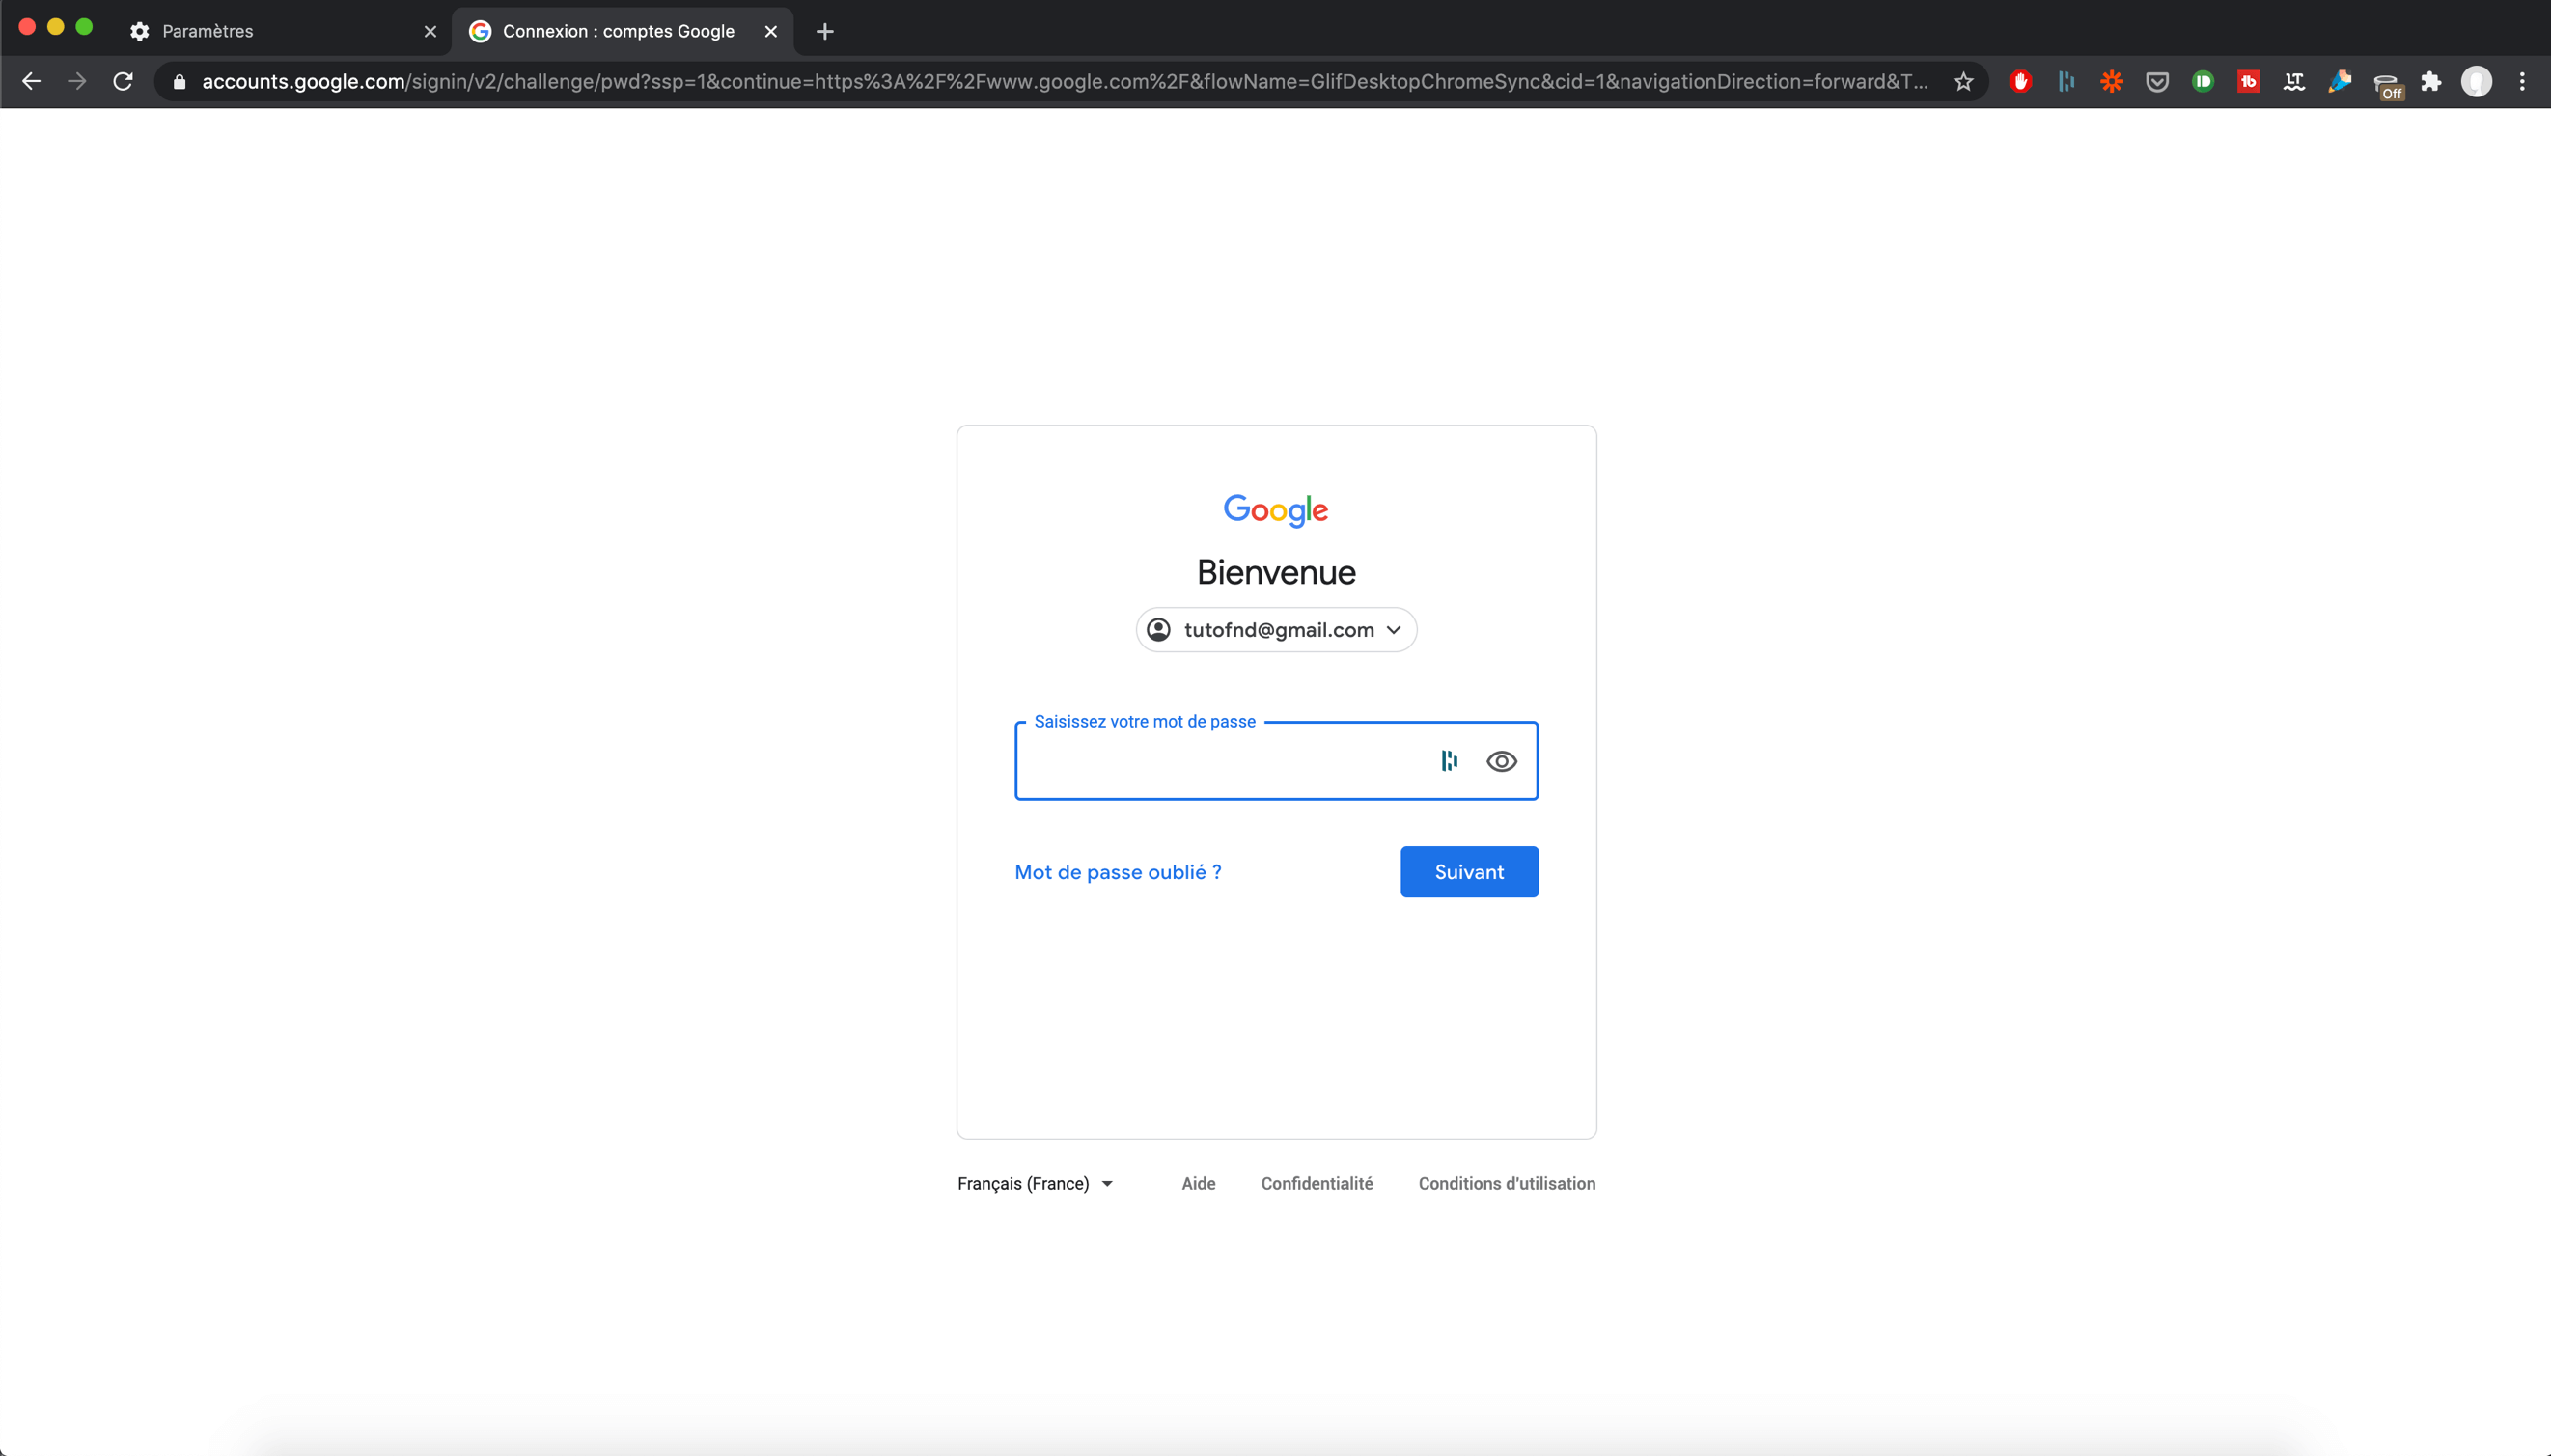 gmail se connecter